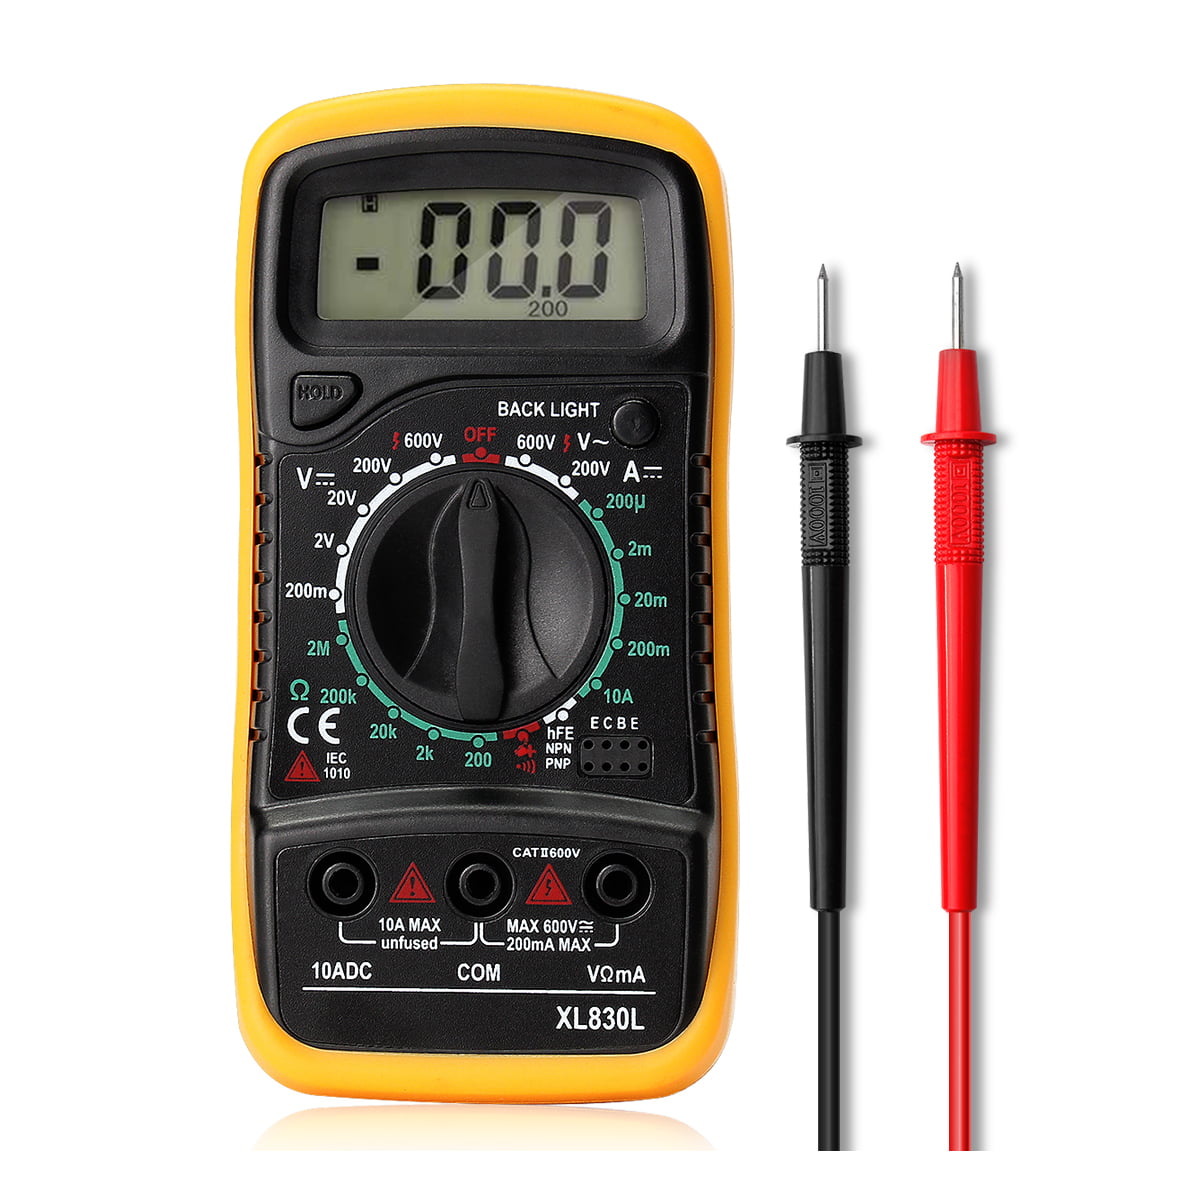 Digital Multimeter Diodes Meter Volt Tester Electric Ac DC Rms AutoRange New Hot 